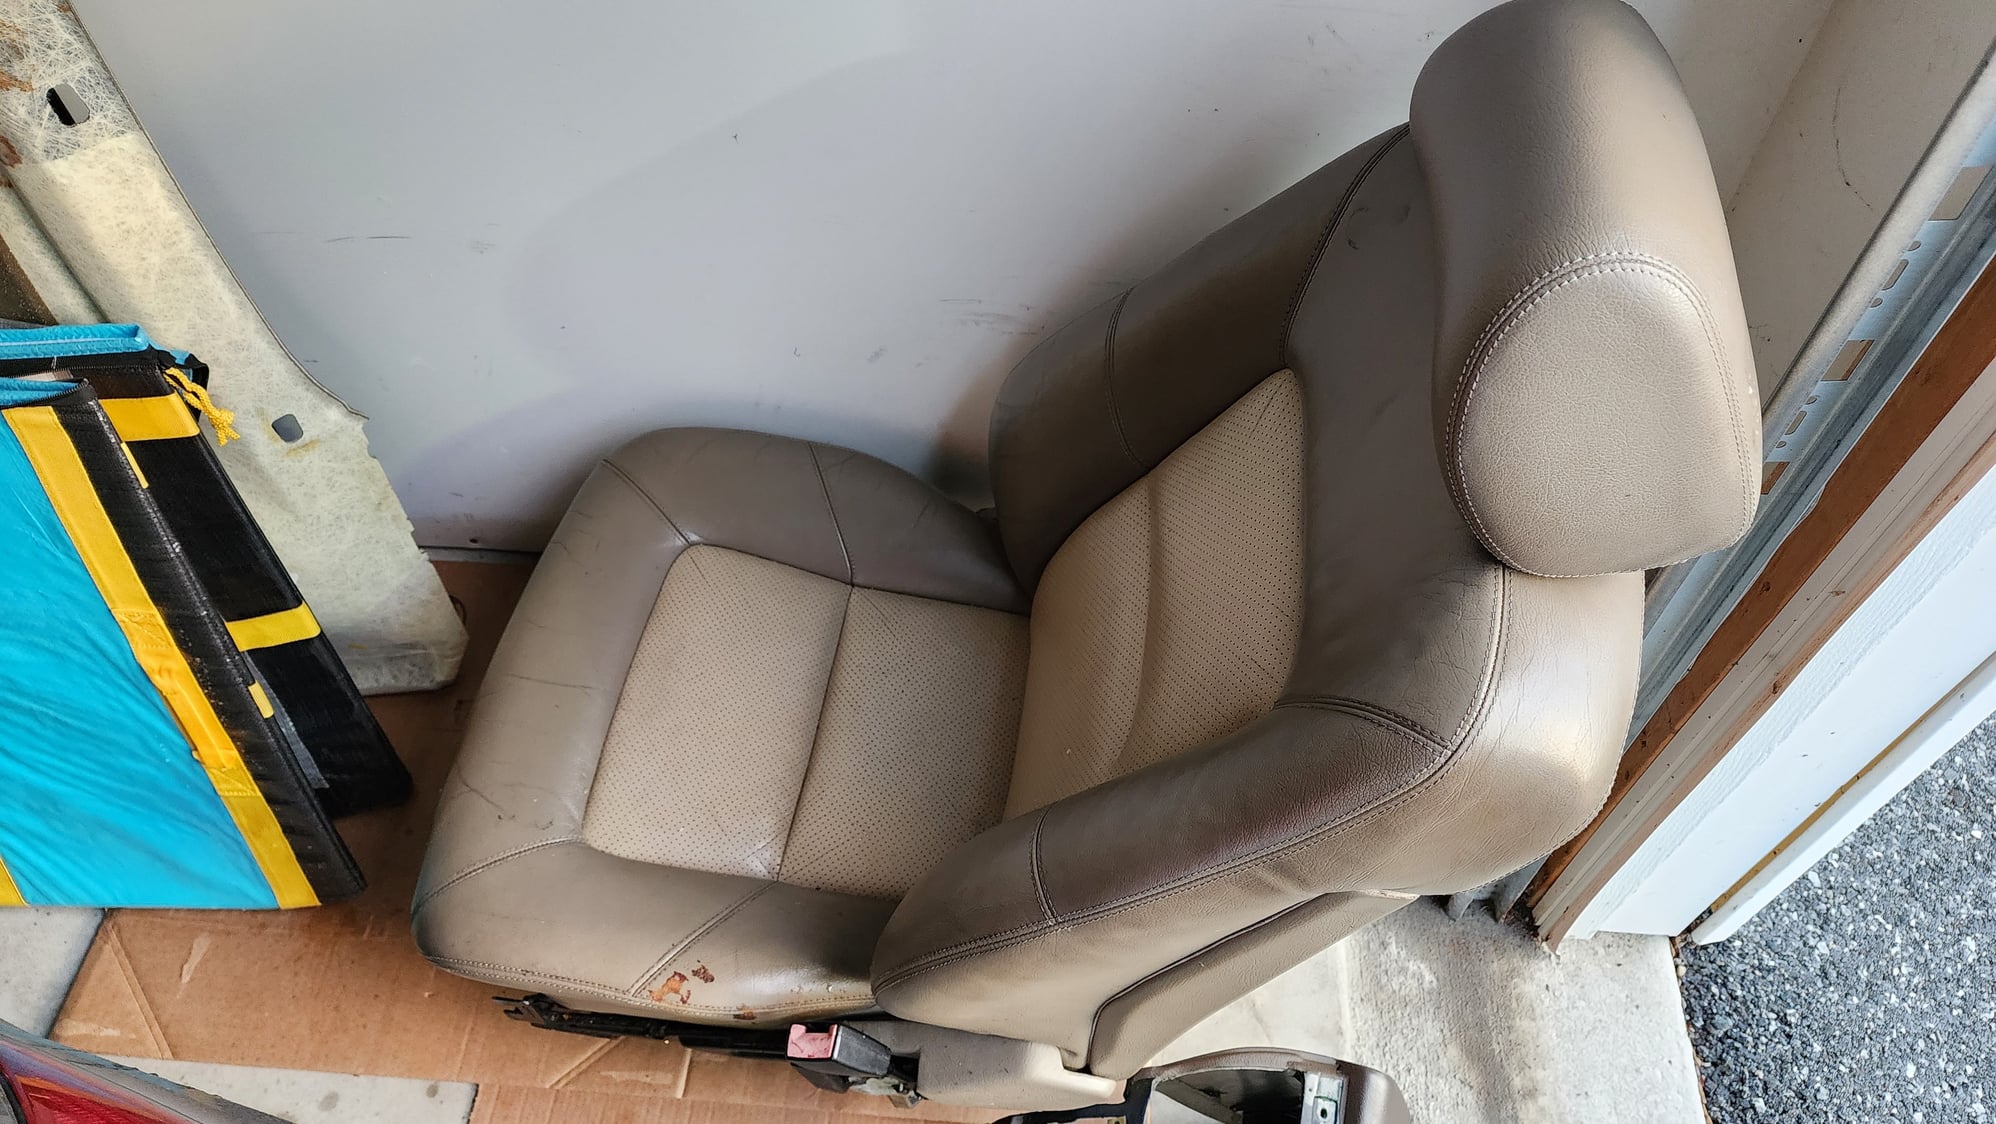 Interior/Upholstery - 1996 S600 LBW sedan interior beige/mushroom - Used - 0  All Models - Newark, DE 19702, United States